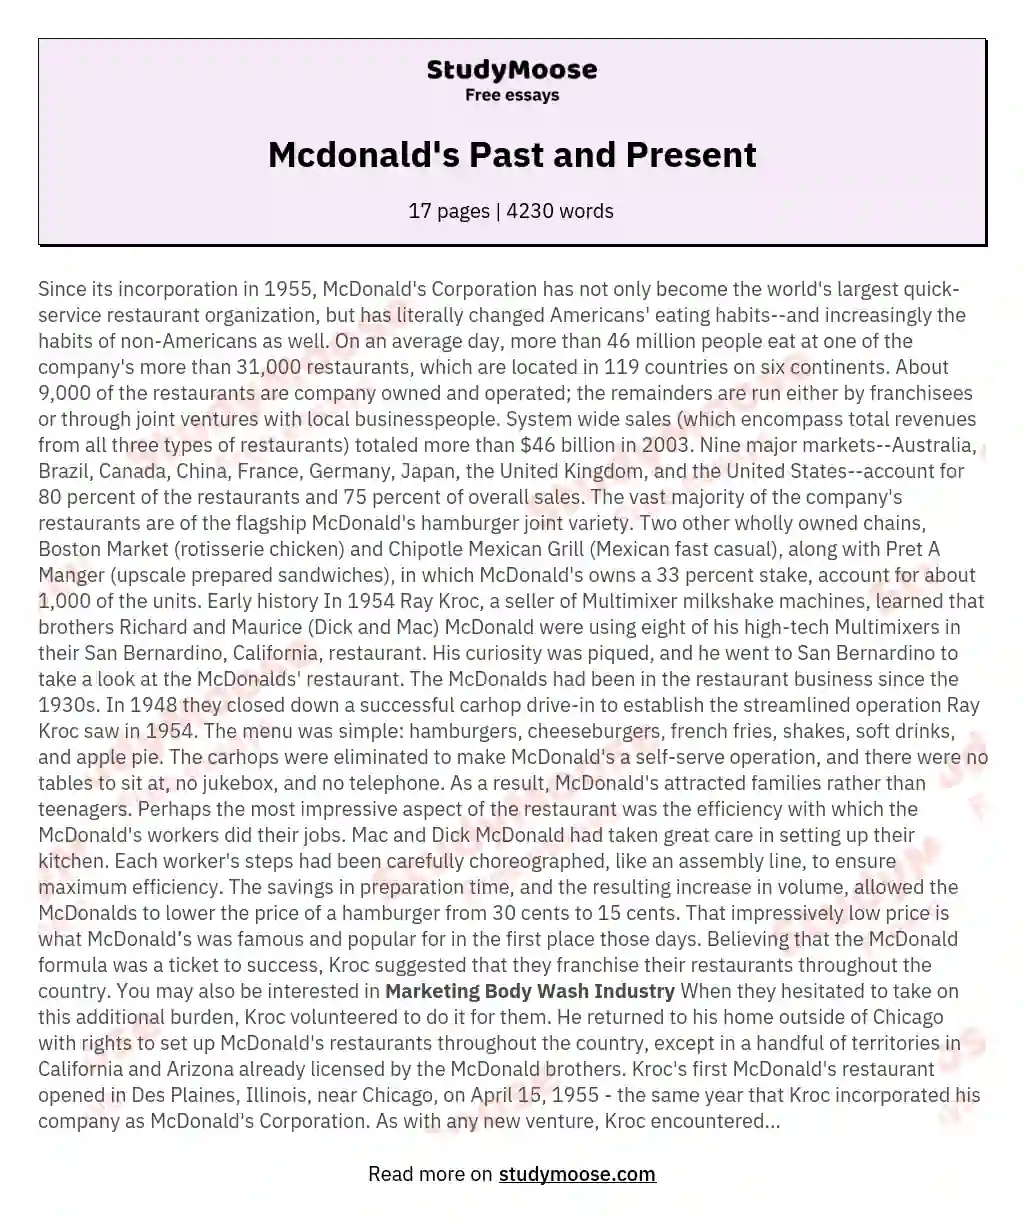 Mcdonald's Past and Present